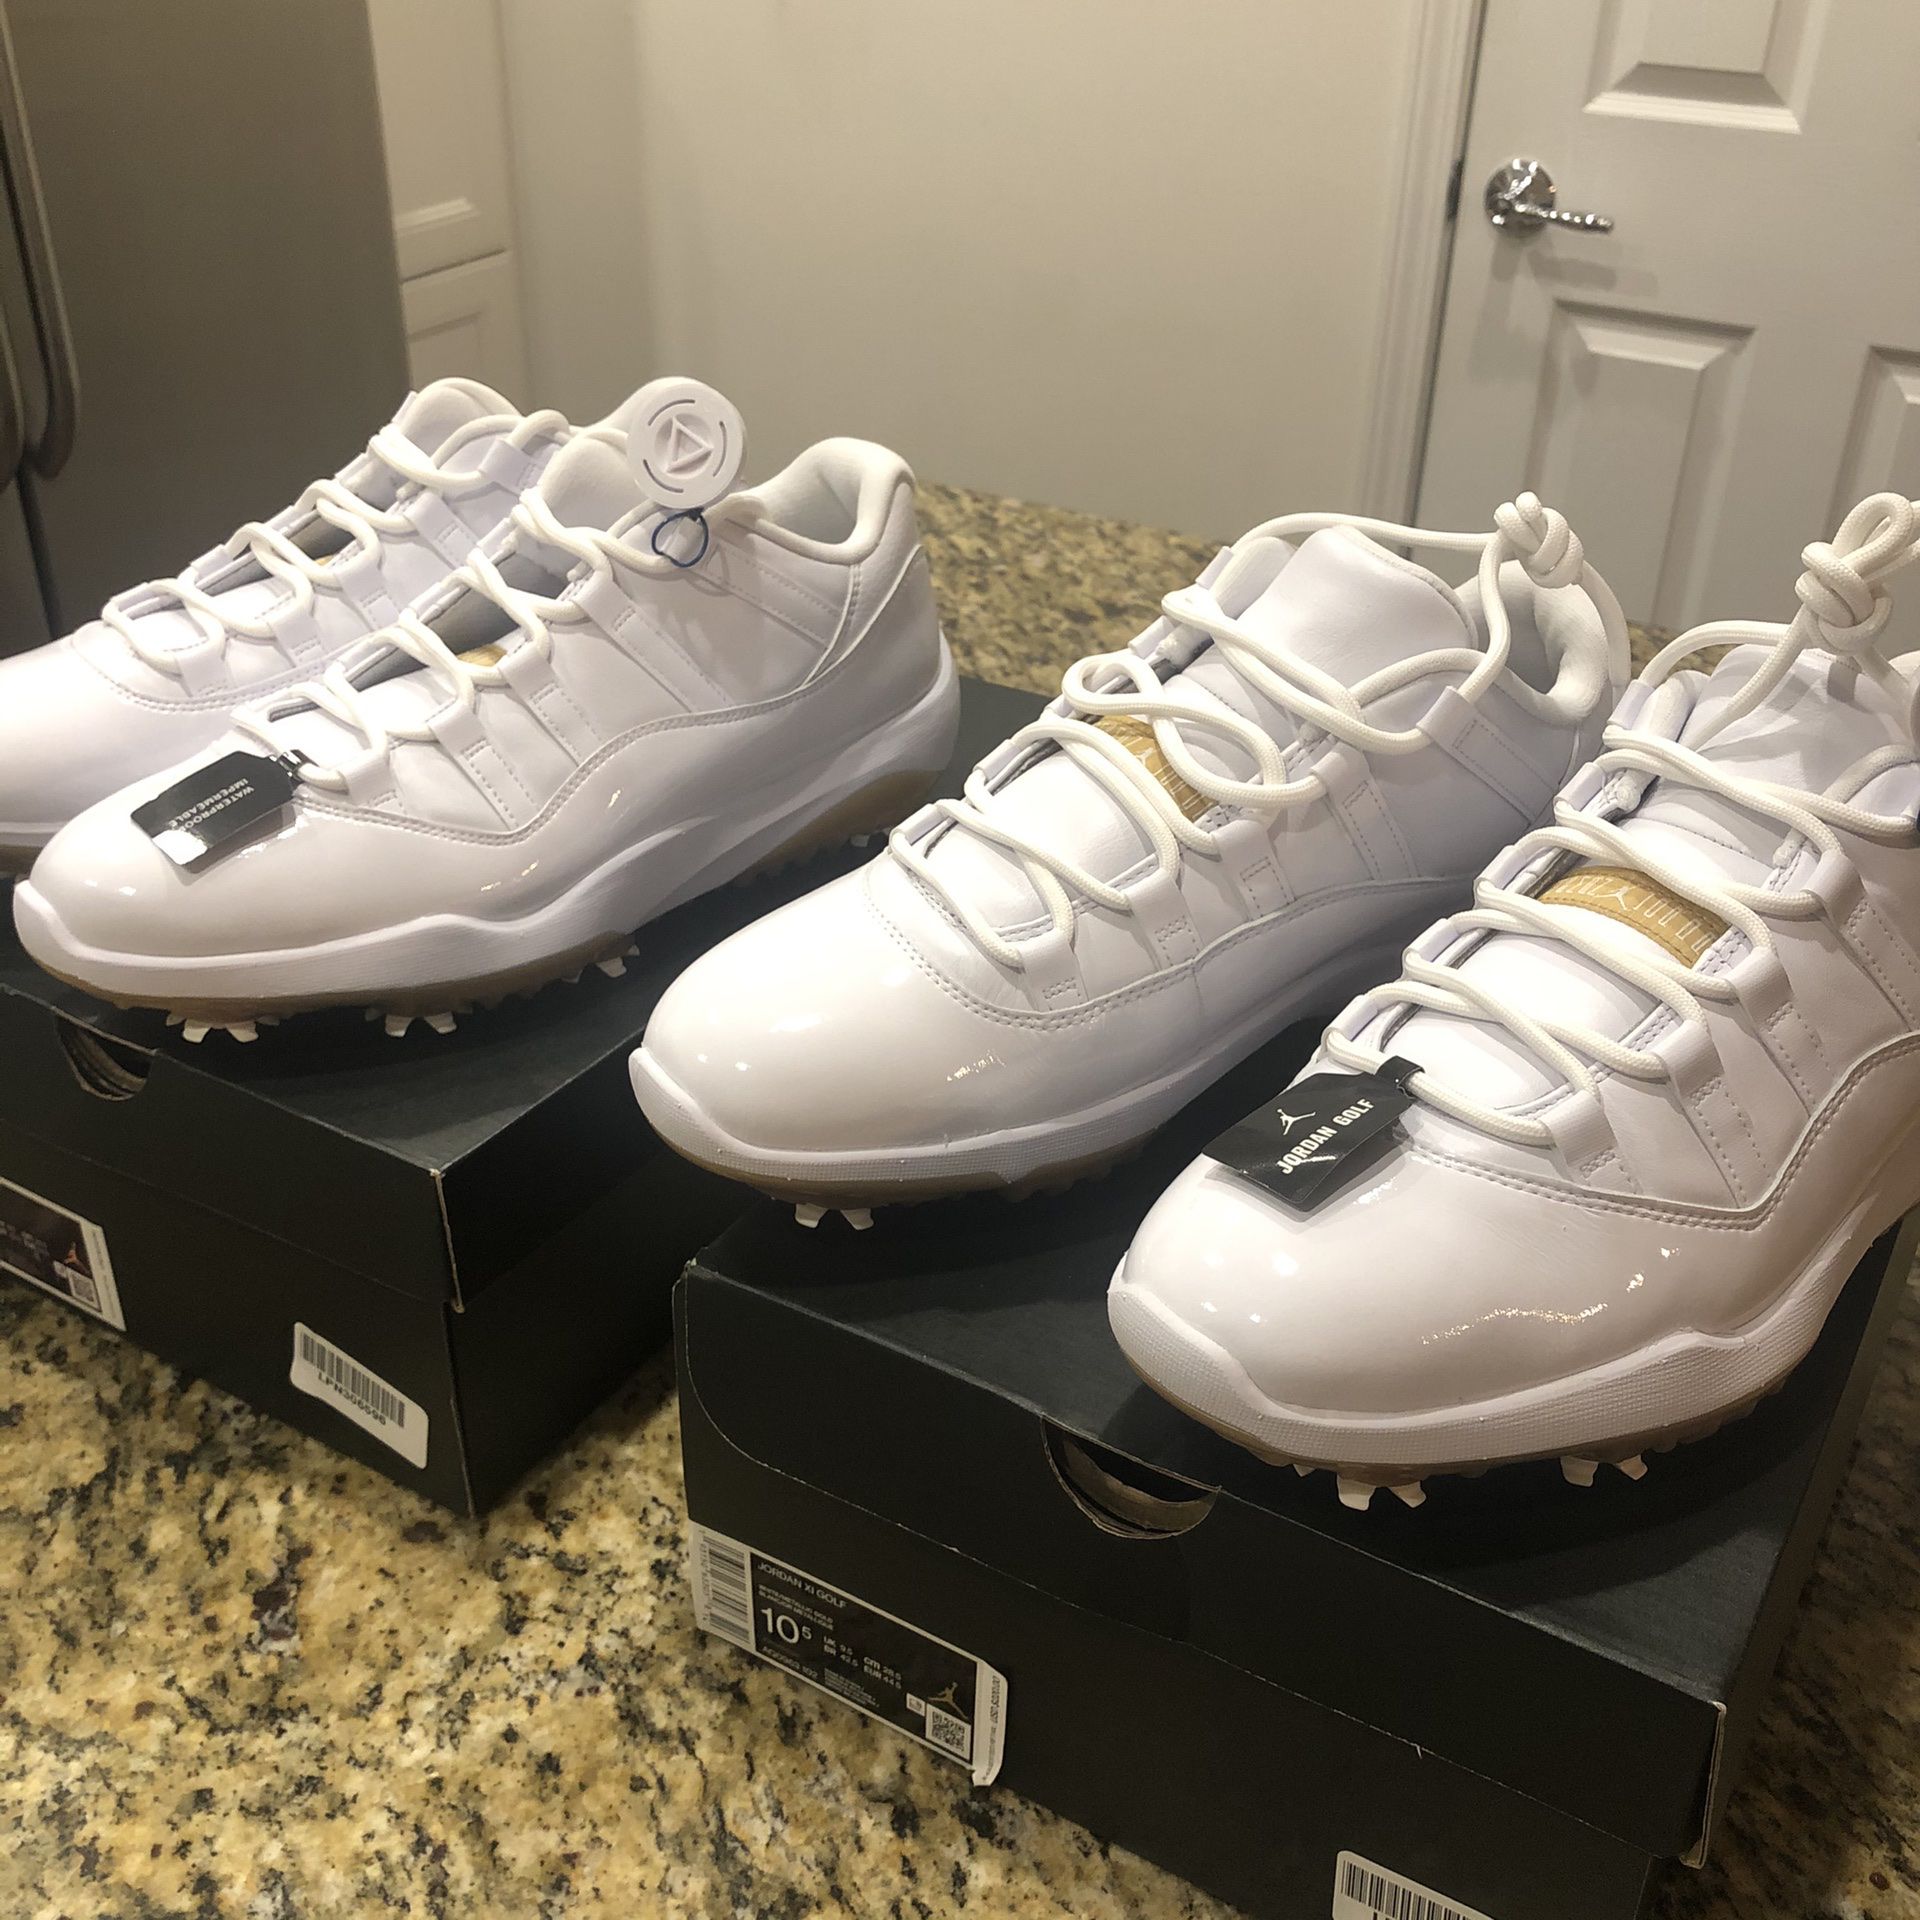 NWB Jordan 11 Golf Shoes, Size 10.5